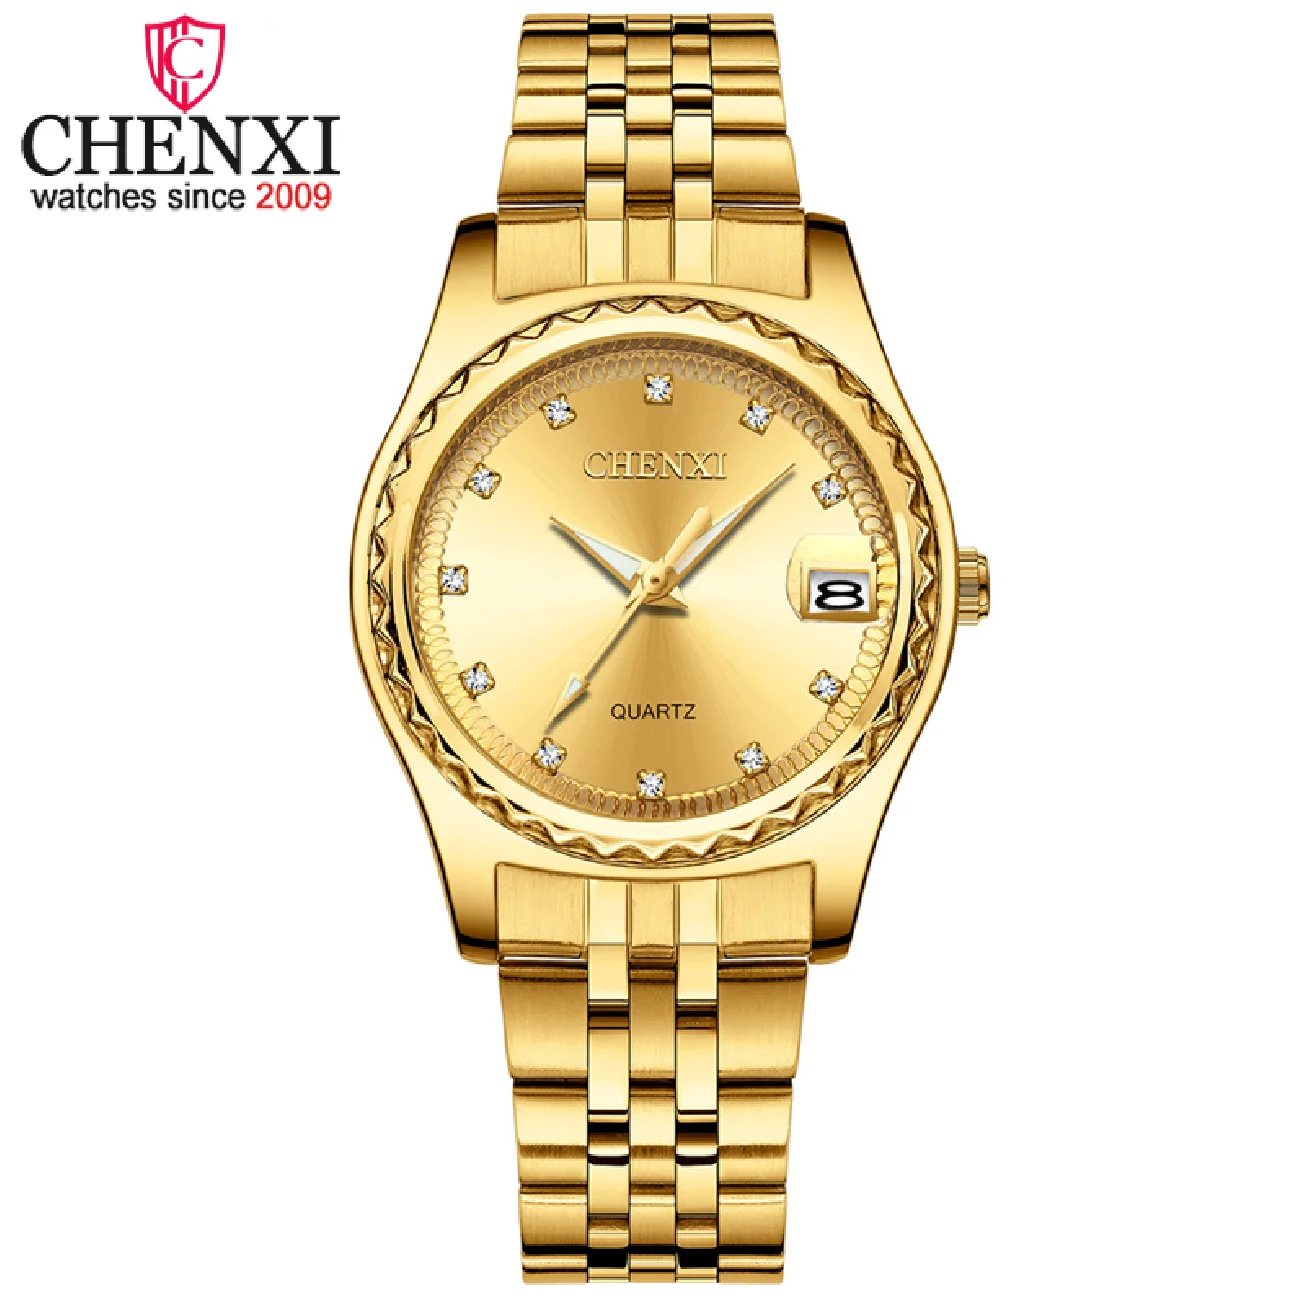 CHENXI Luxury New Women Calendar Watch Fashion Waterproof Analog Quartz Wrist Watch Dress Ladies Watches Gift for Girls Wife enlarge